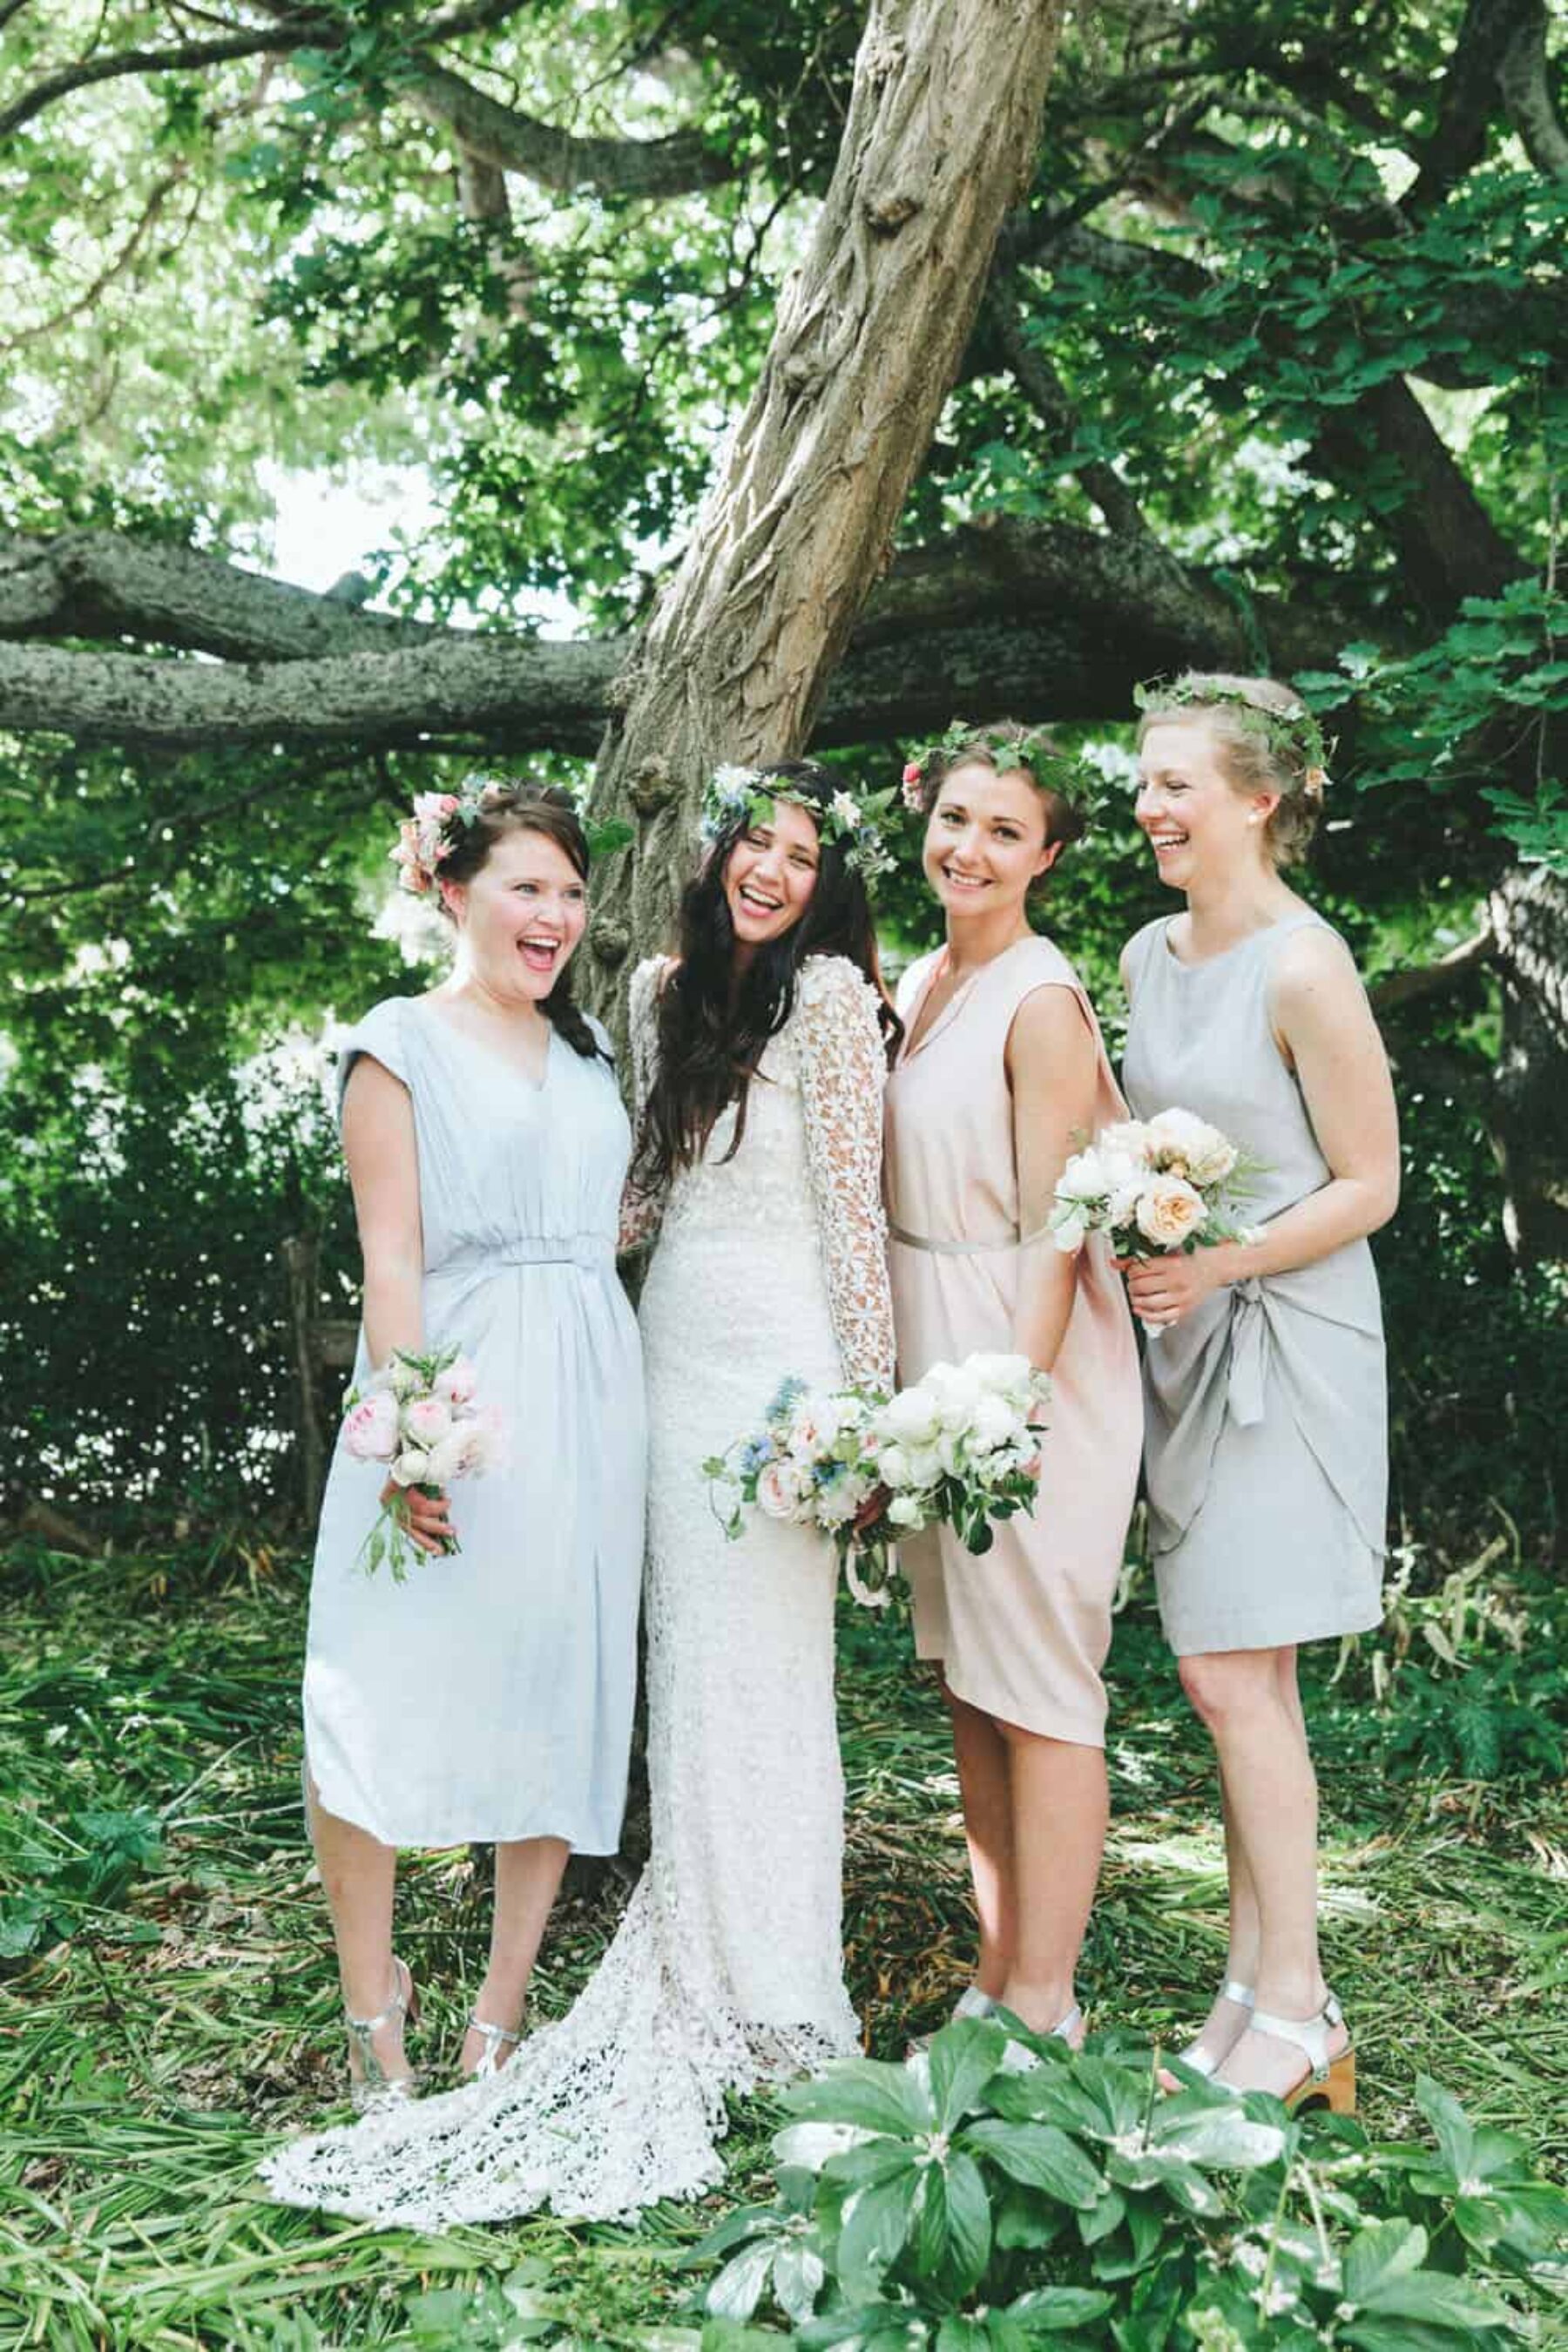 Pastel bridesmaids dresses